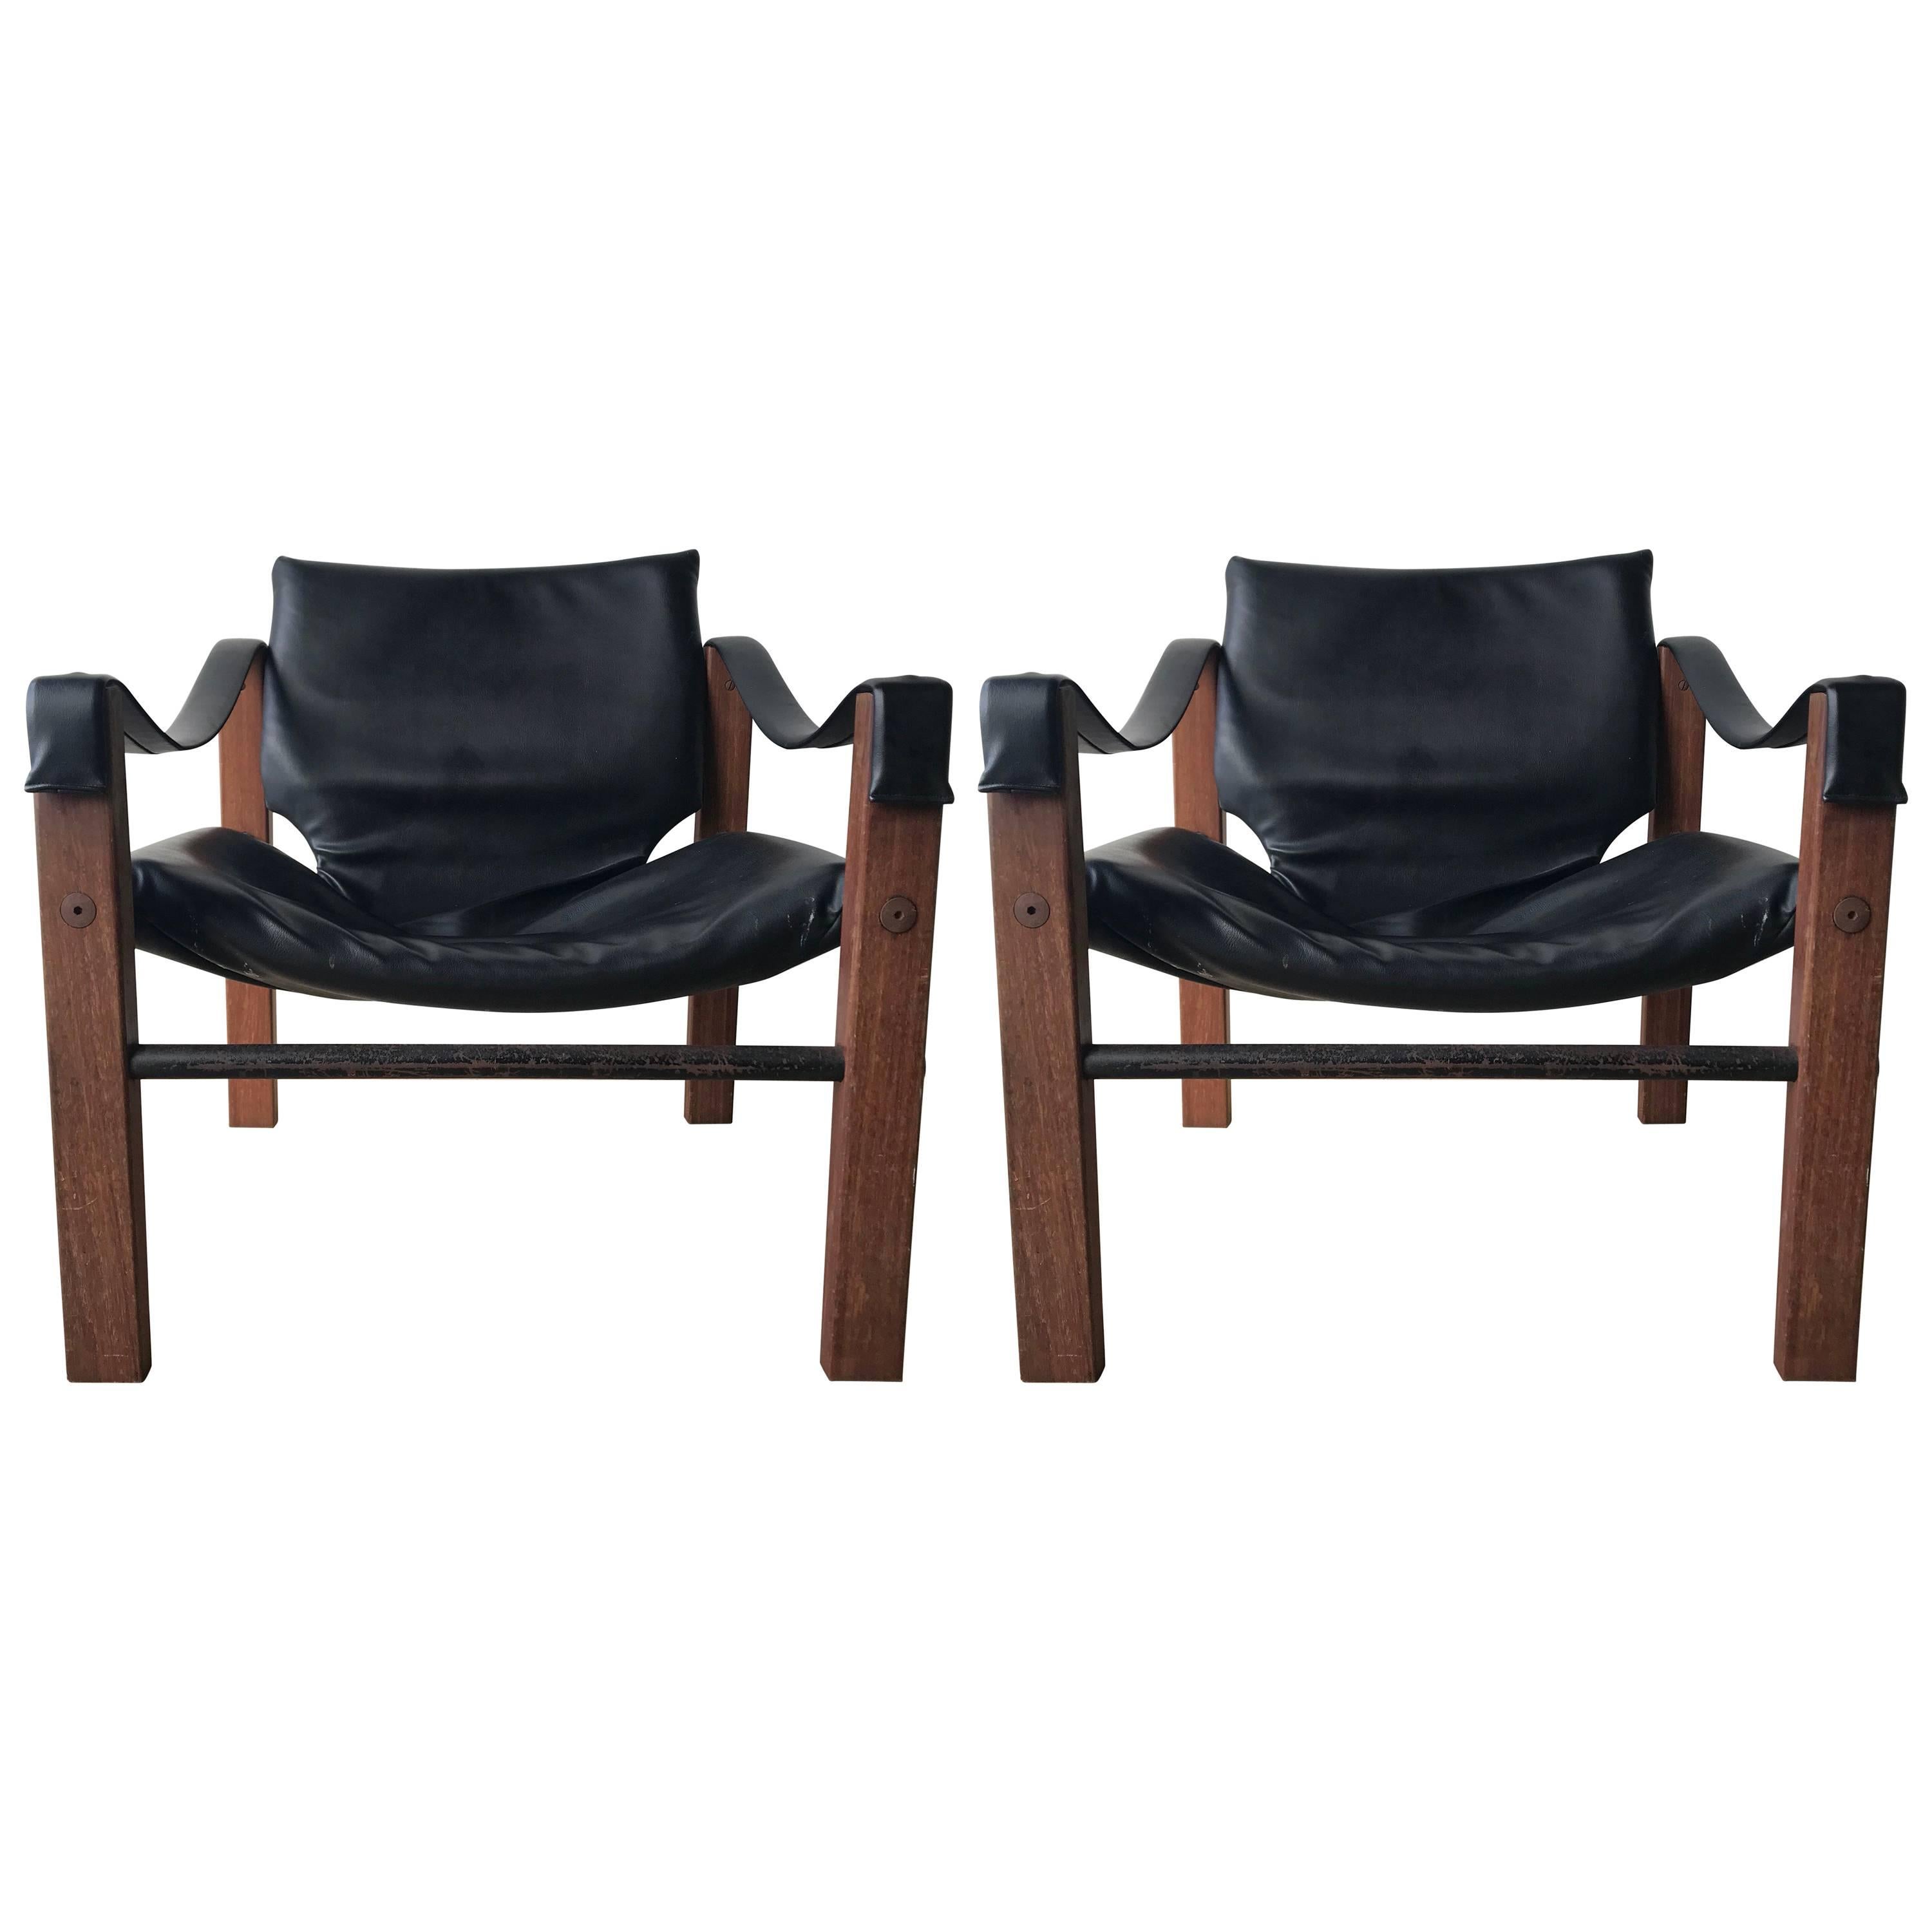 Pair of Black “Safari” Chairs by Maurice Burke for Arkana